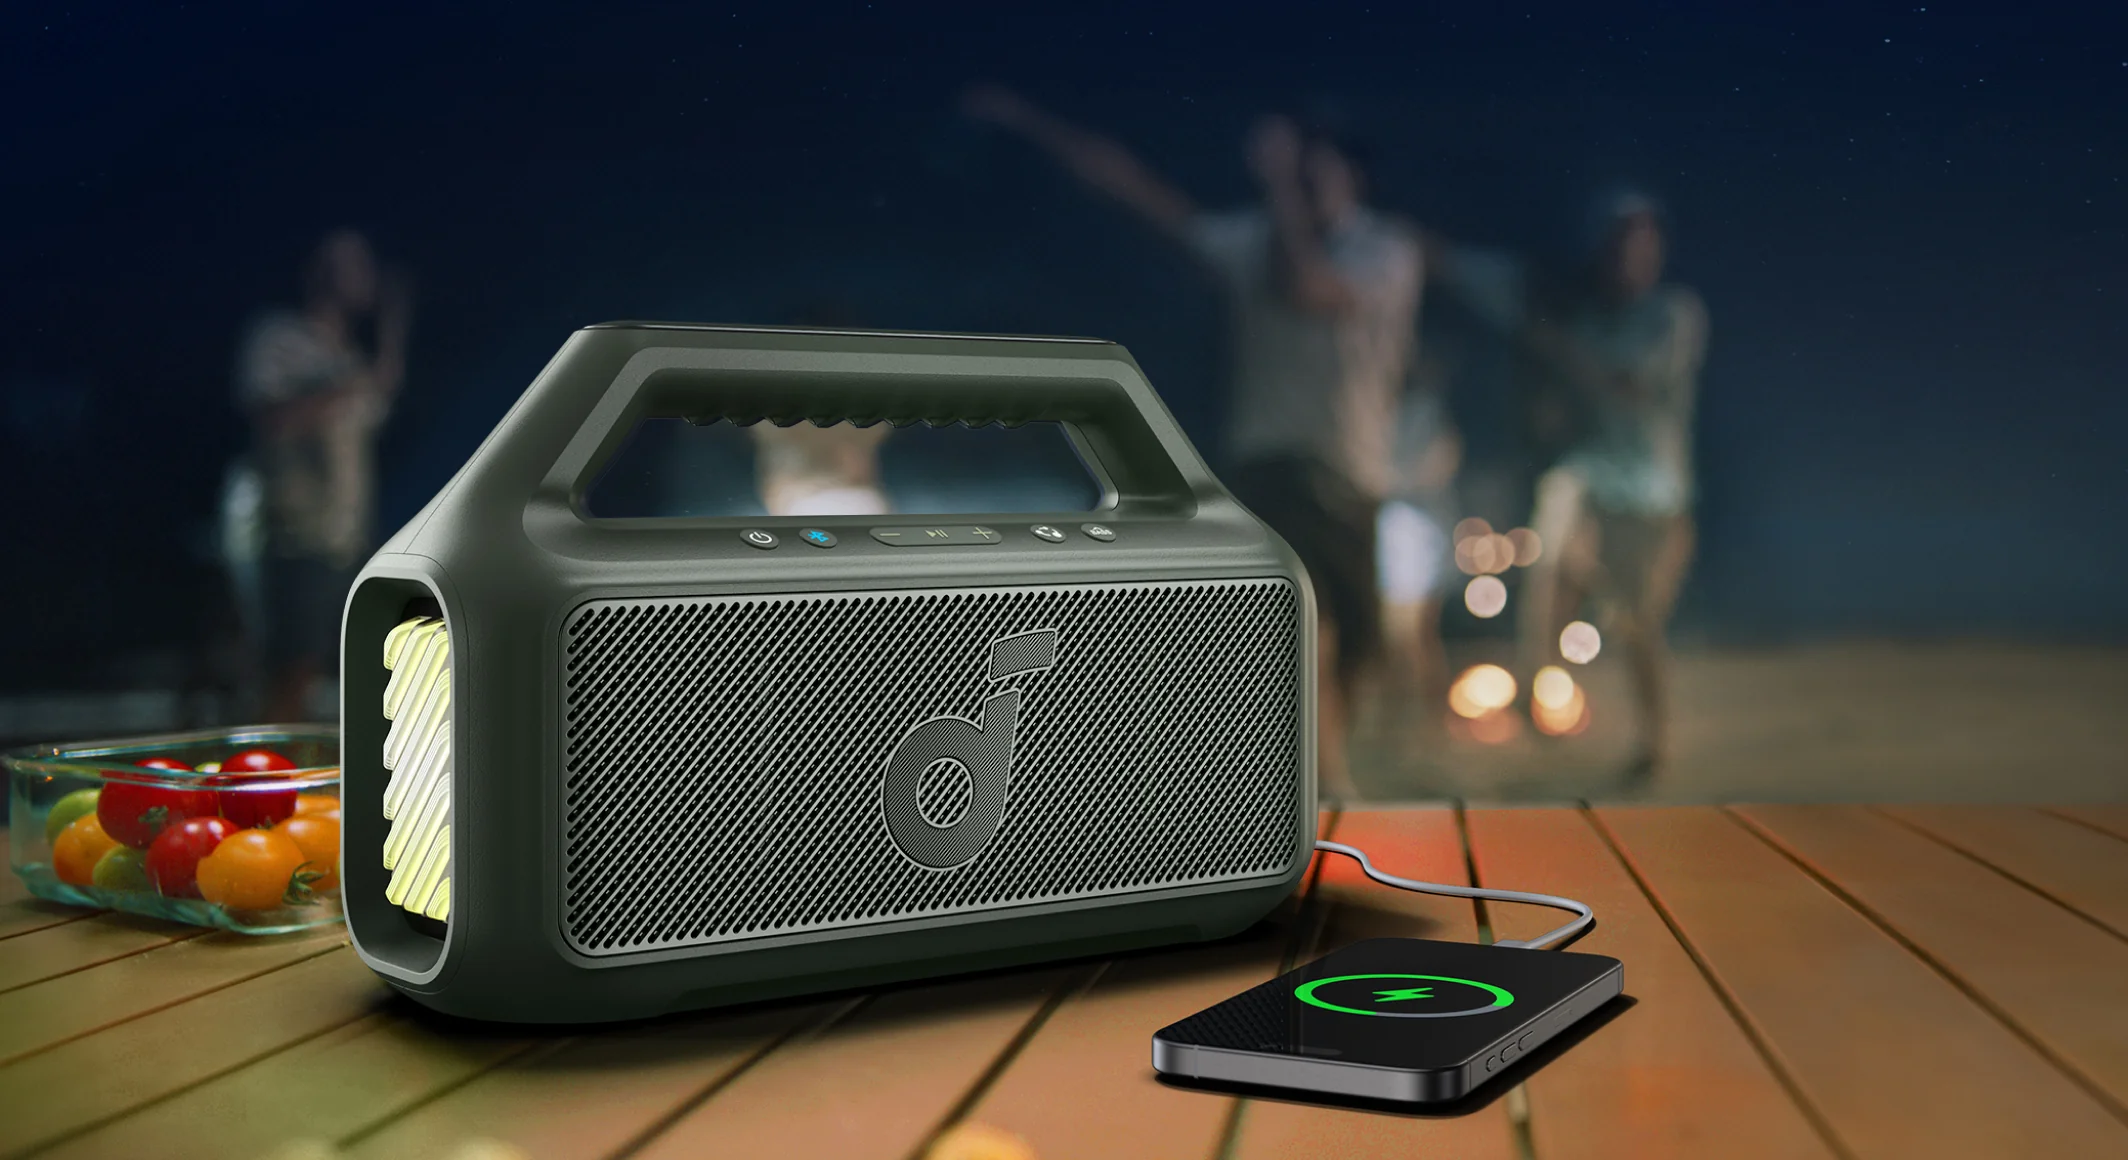 UE Boom 2 Bluetooth speaker review - The Gadgeteer